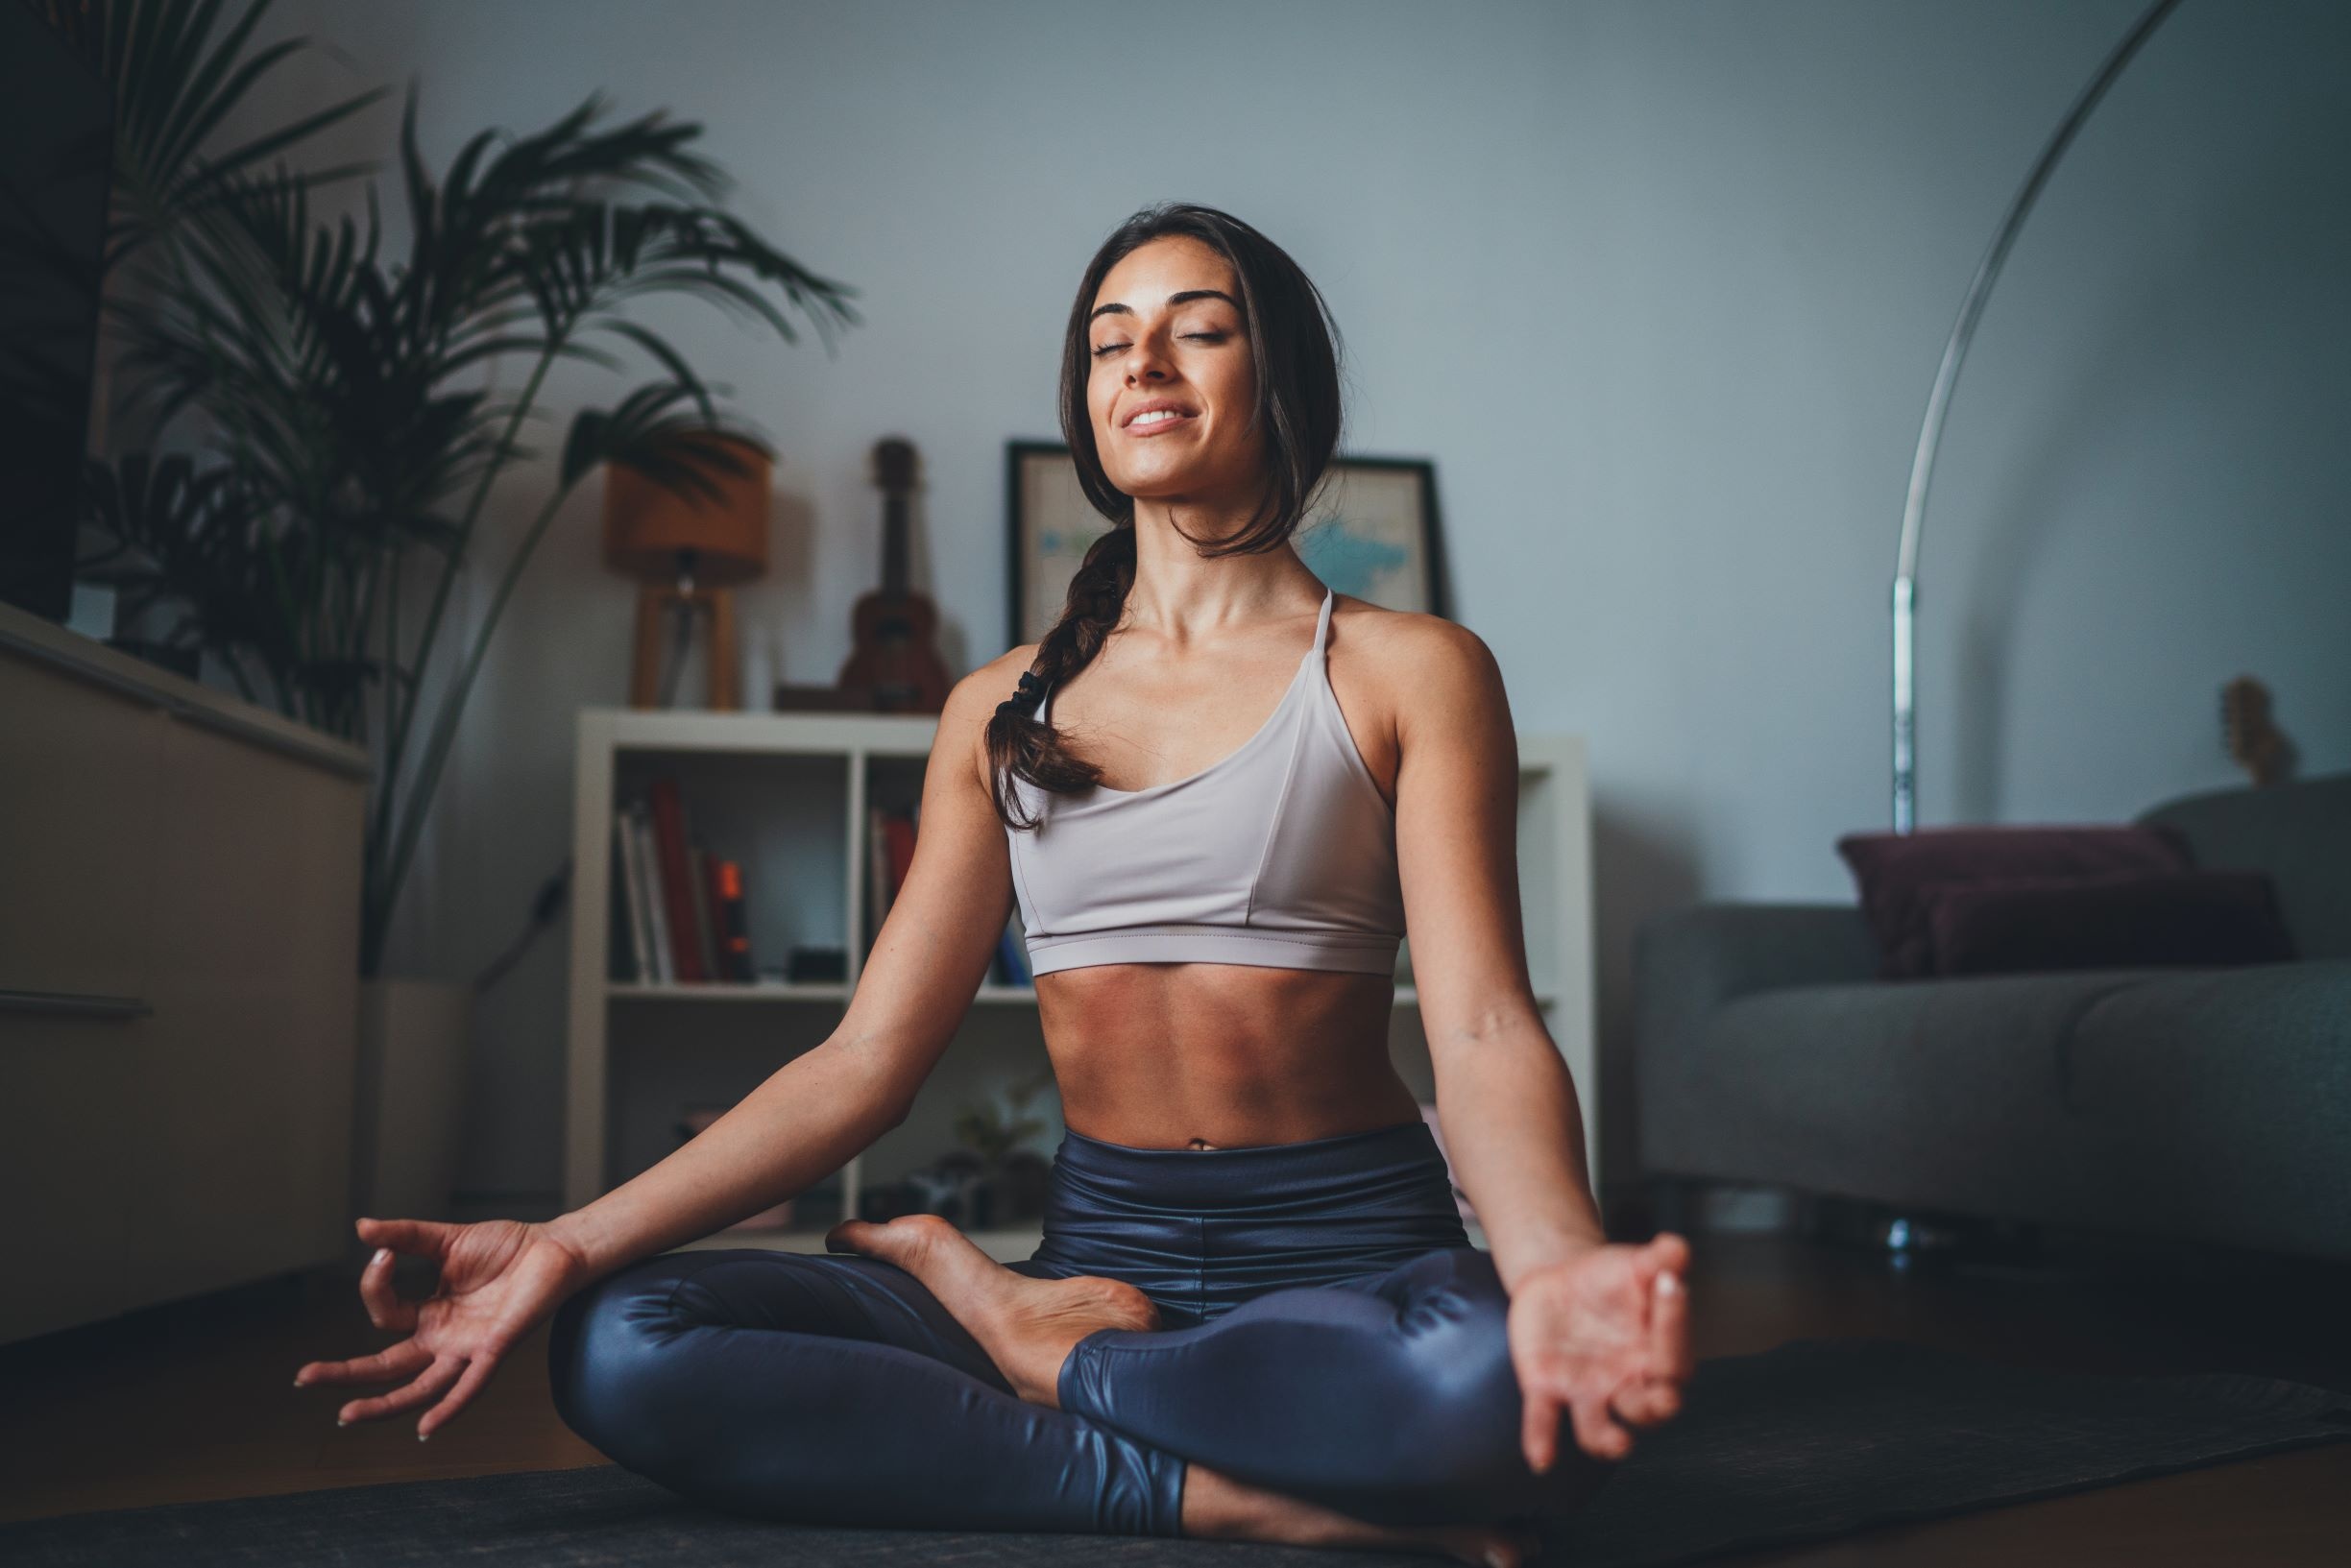 Benefits of hot yoga - How Bikram yoga boosts mental health